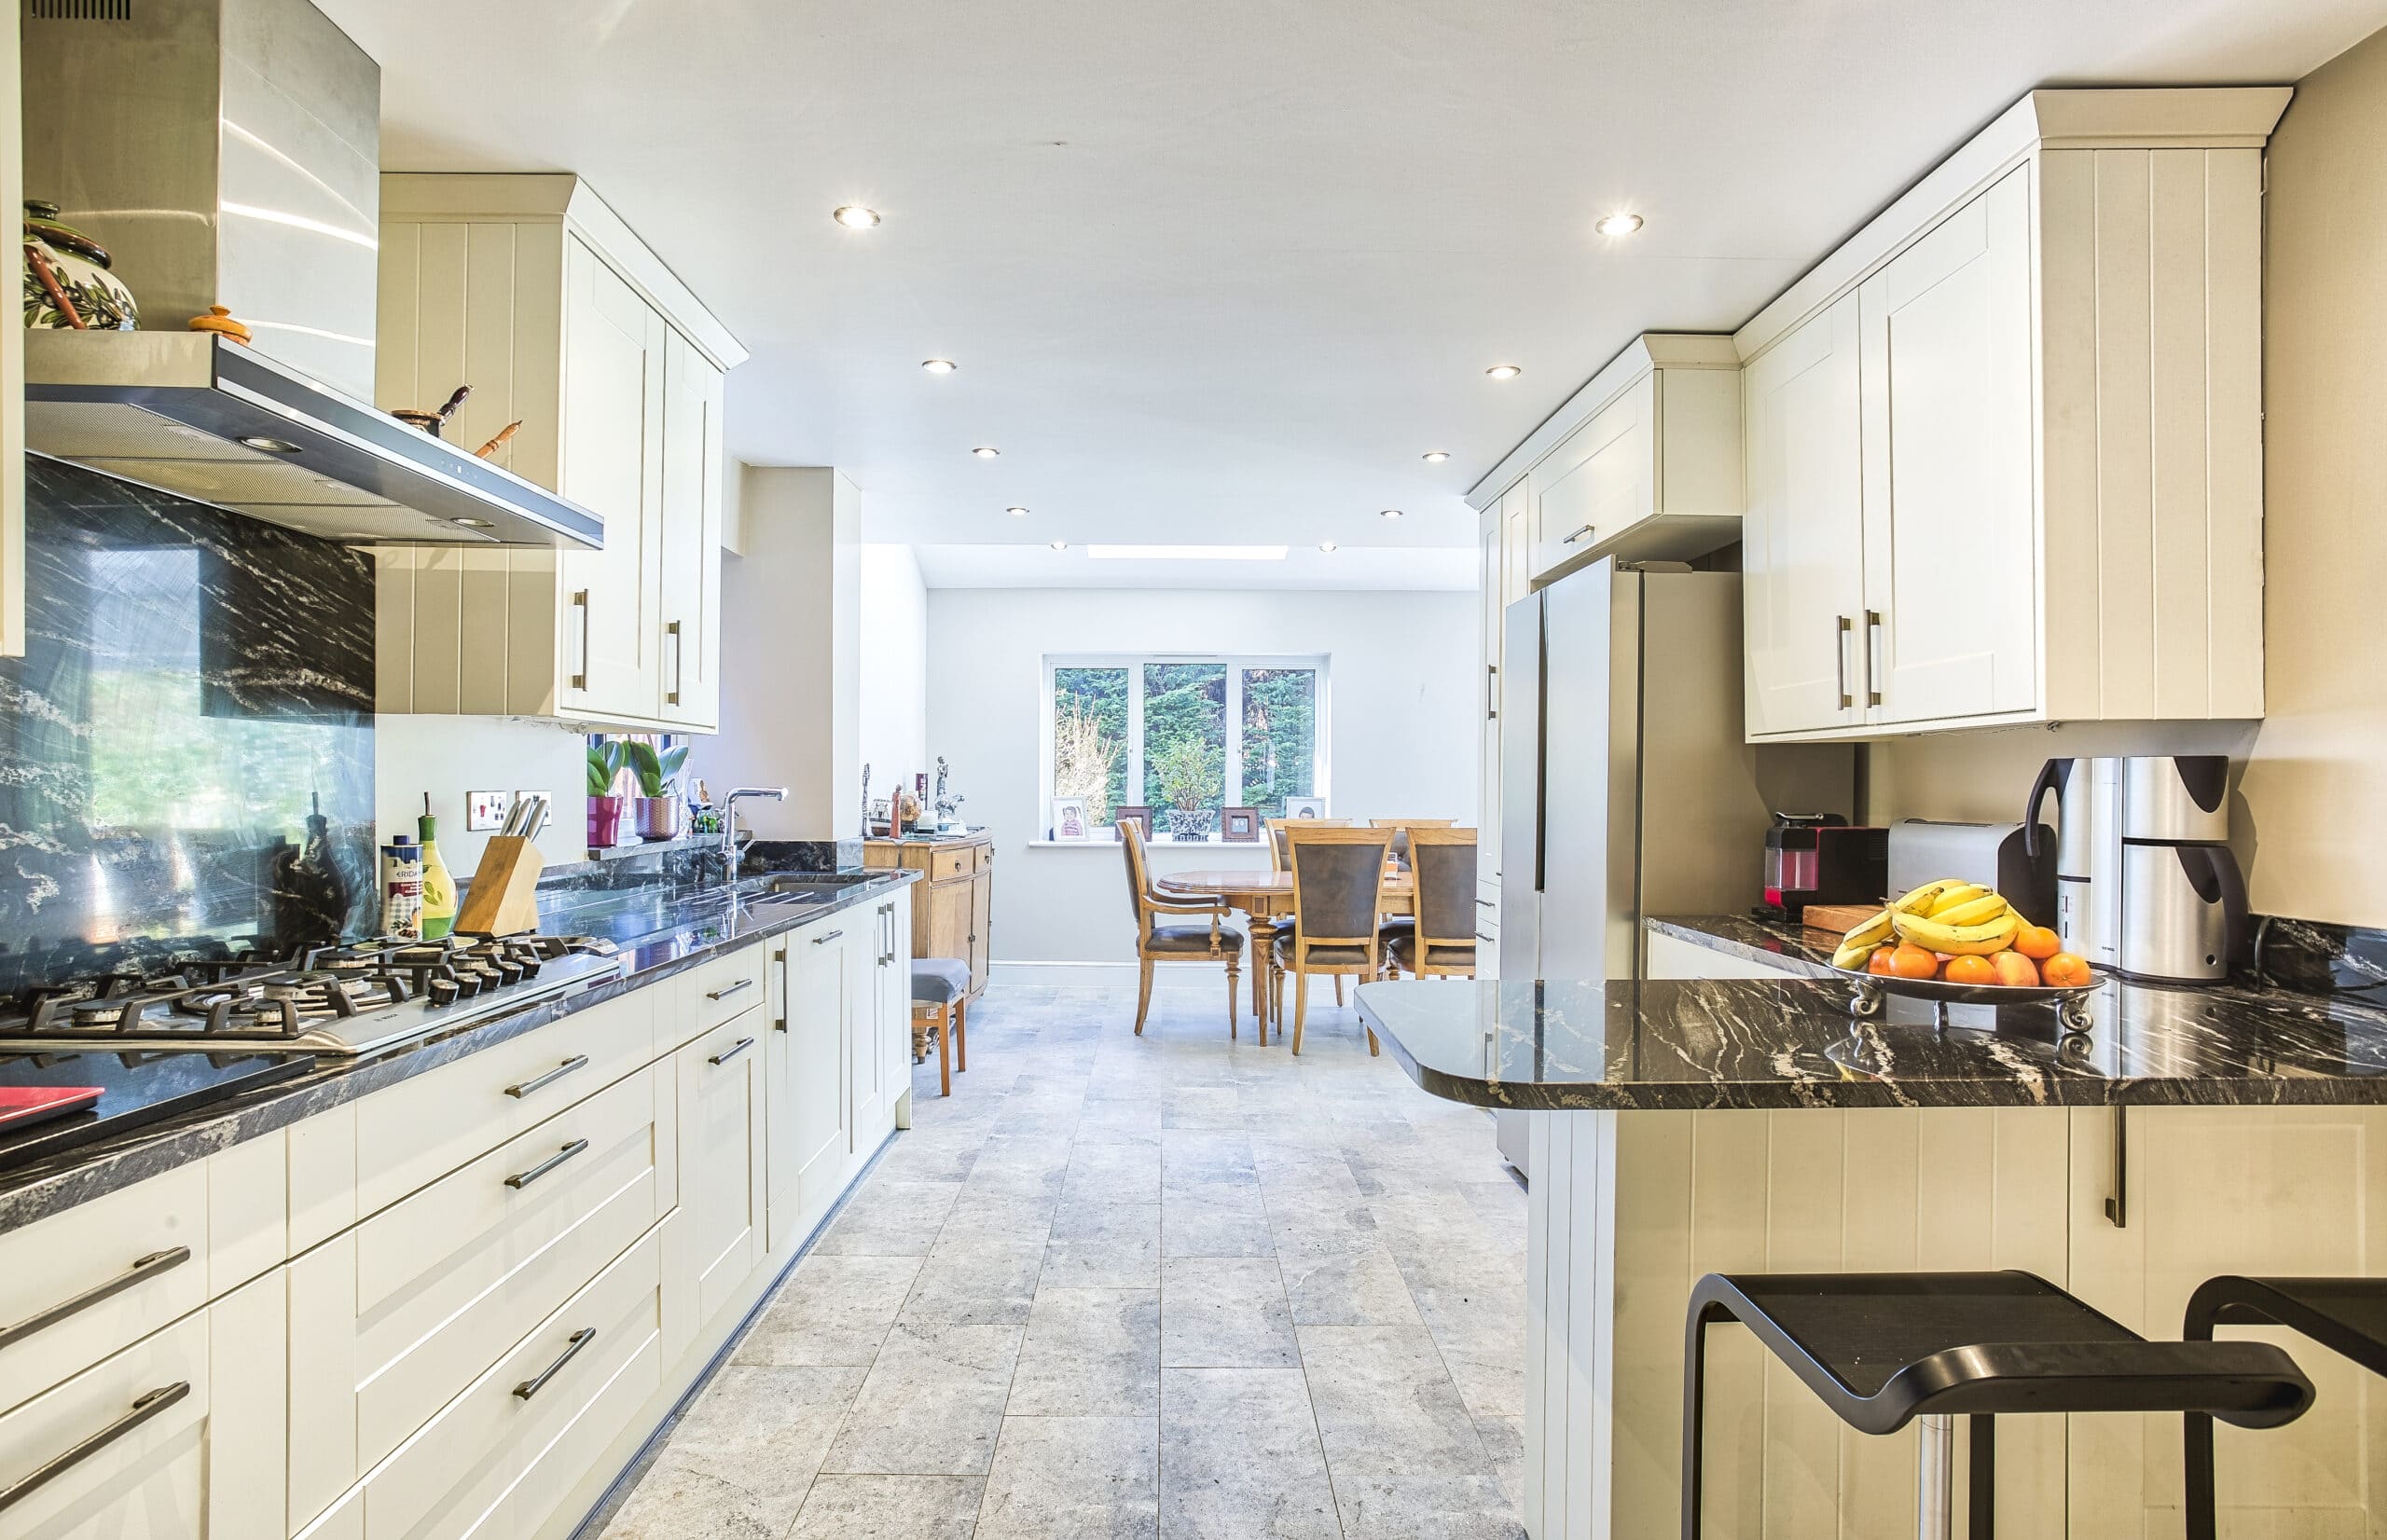 Smart new kitchen with cream units and granite worktops